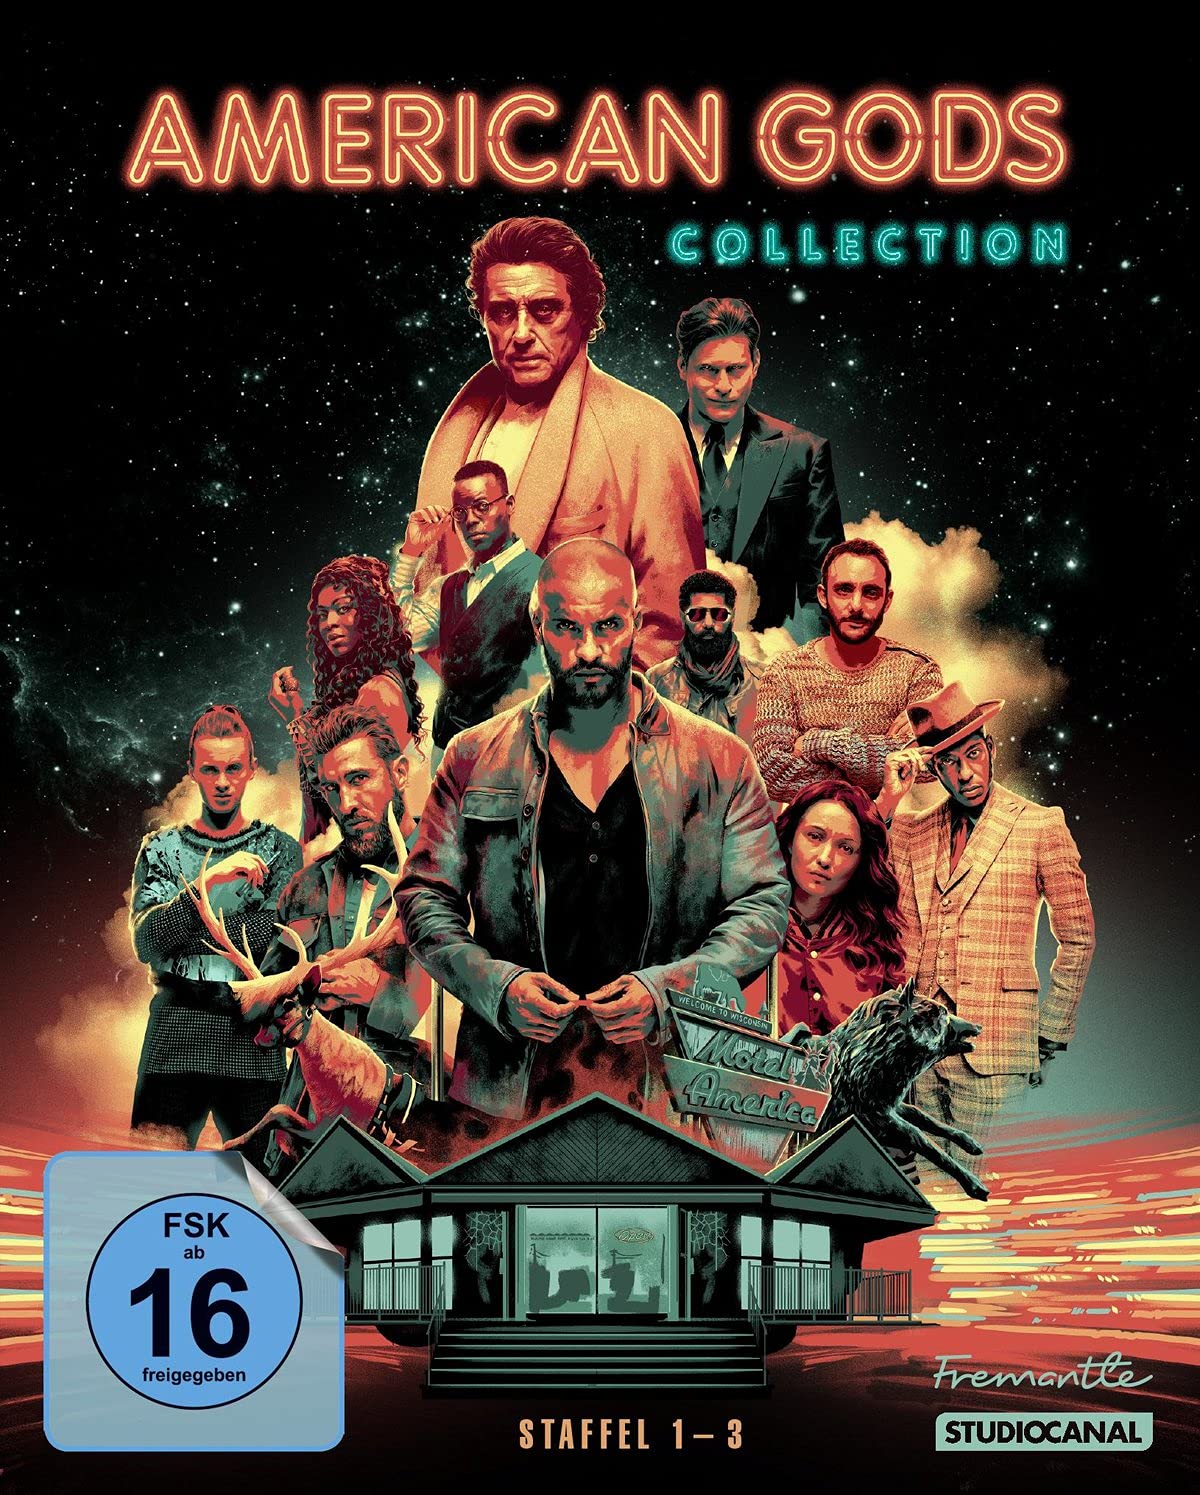 American Gods - Collection - Staffel 1-3 (10 Blu-rays)